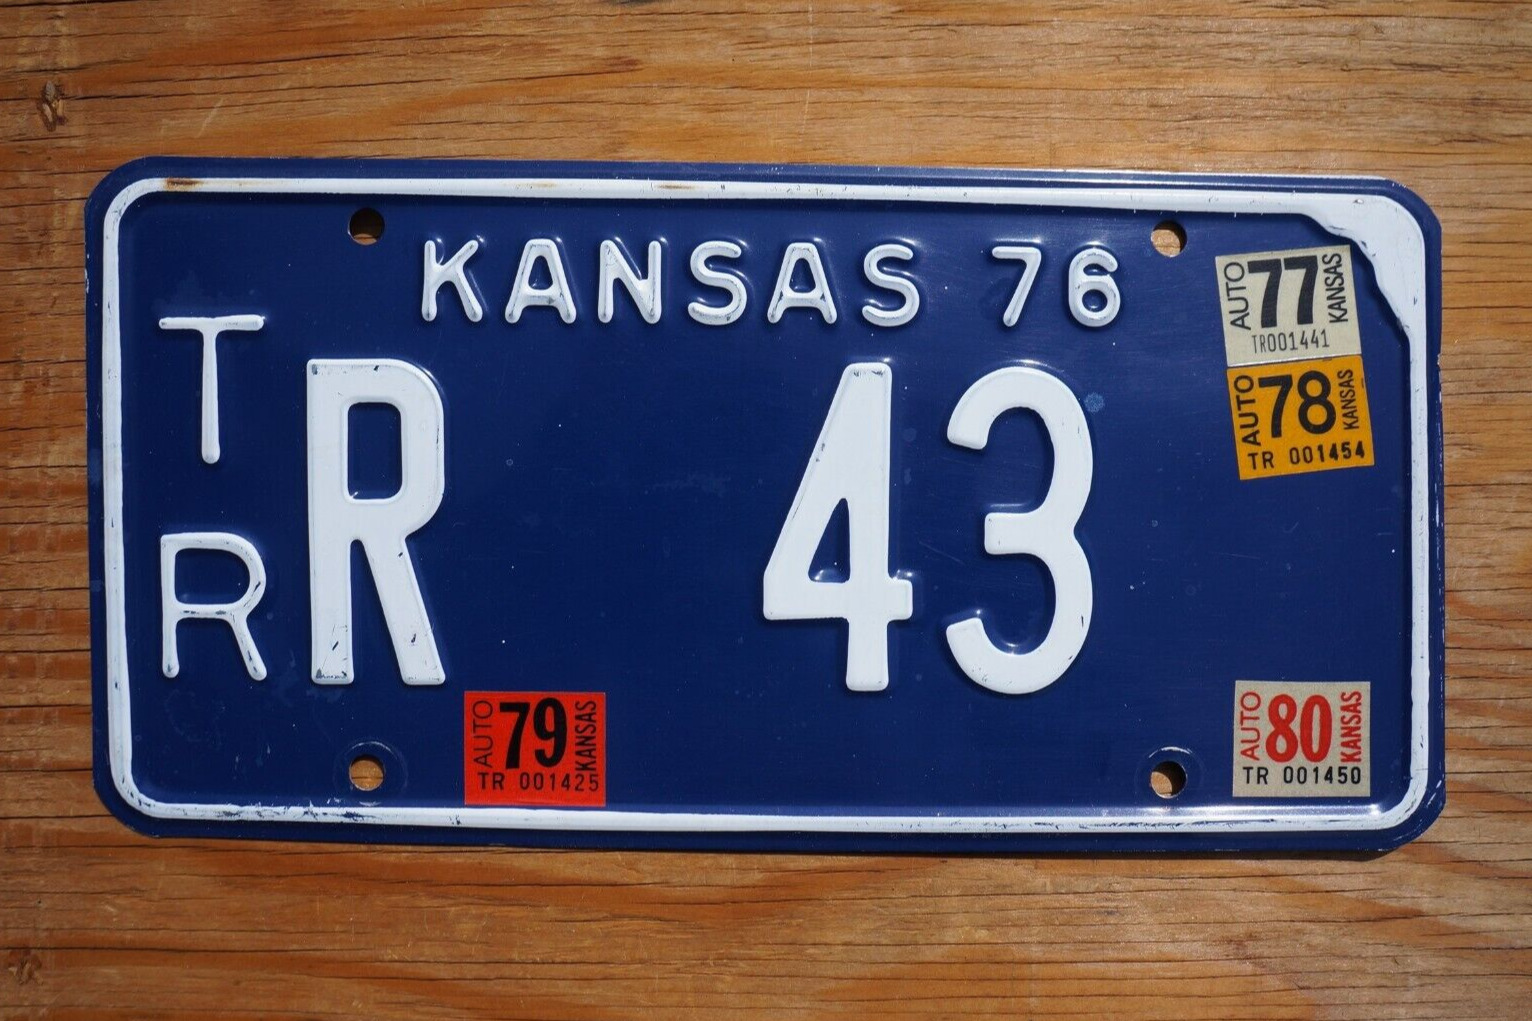 1976 TREGO County (83) KANSAS License Plate # 43